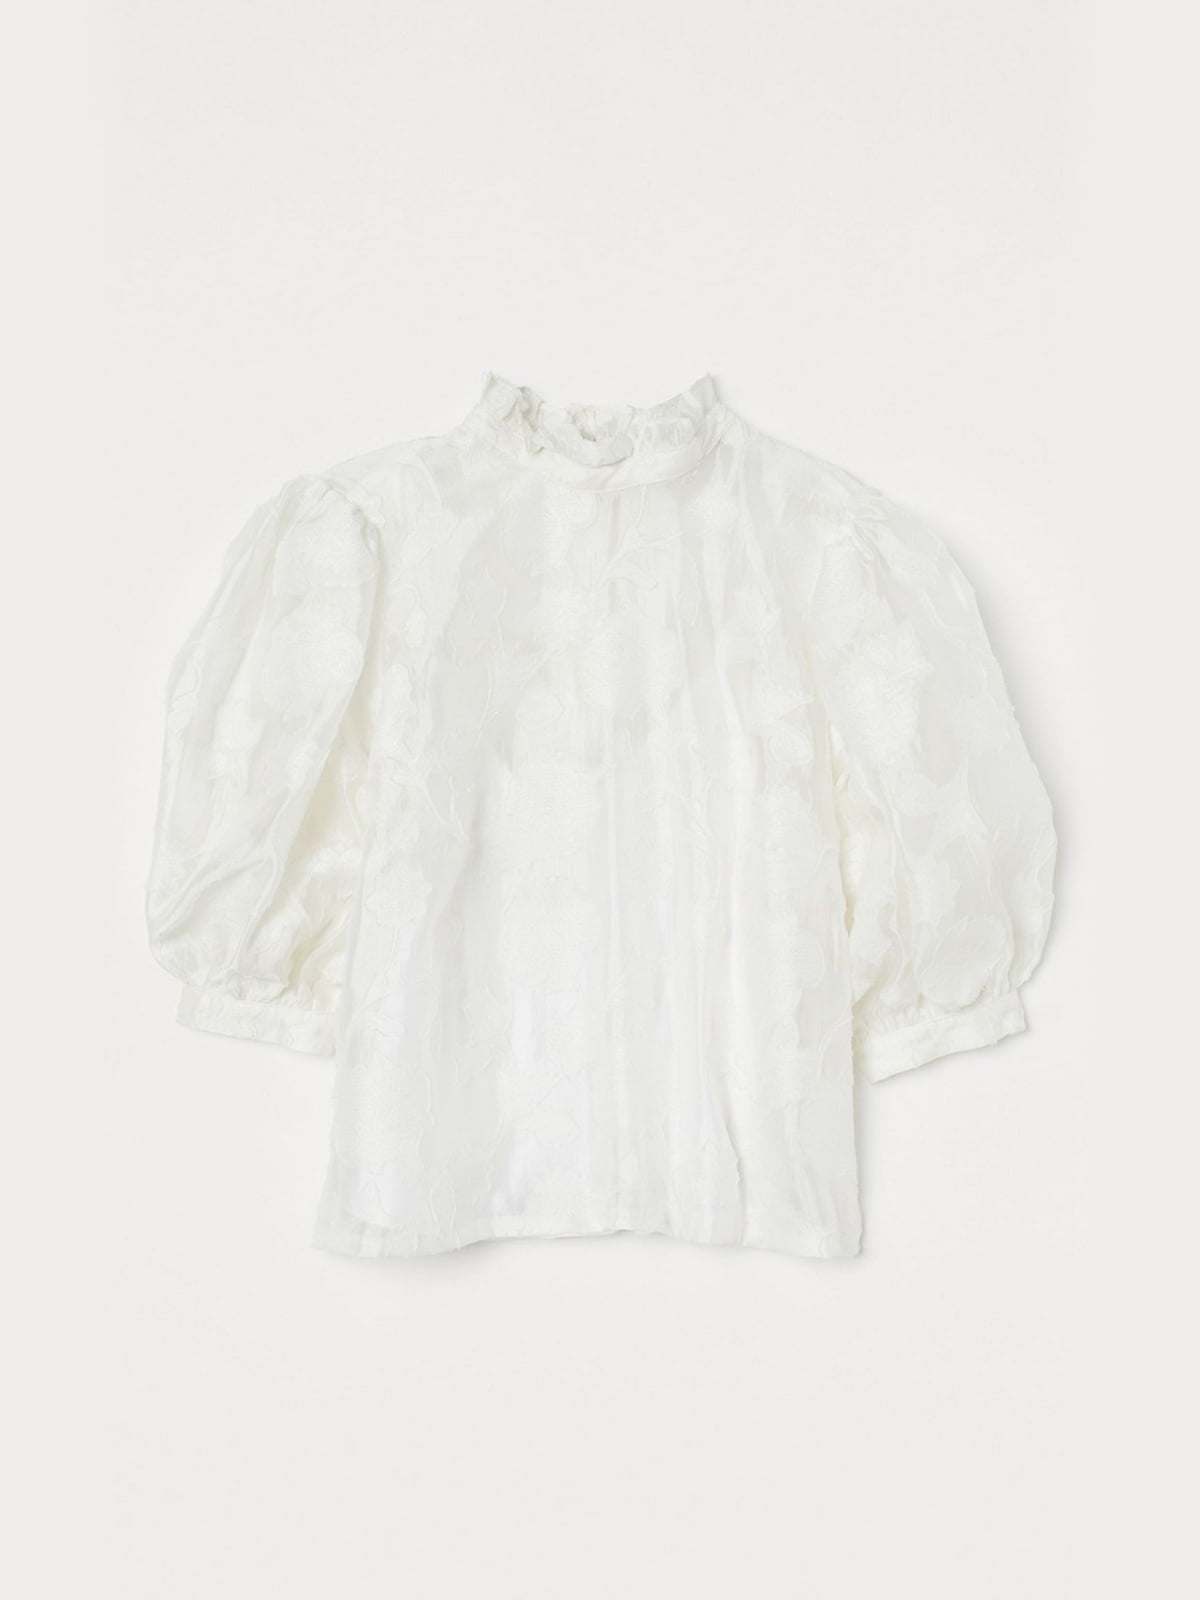 Блуза біла з принтом | 5898370